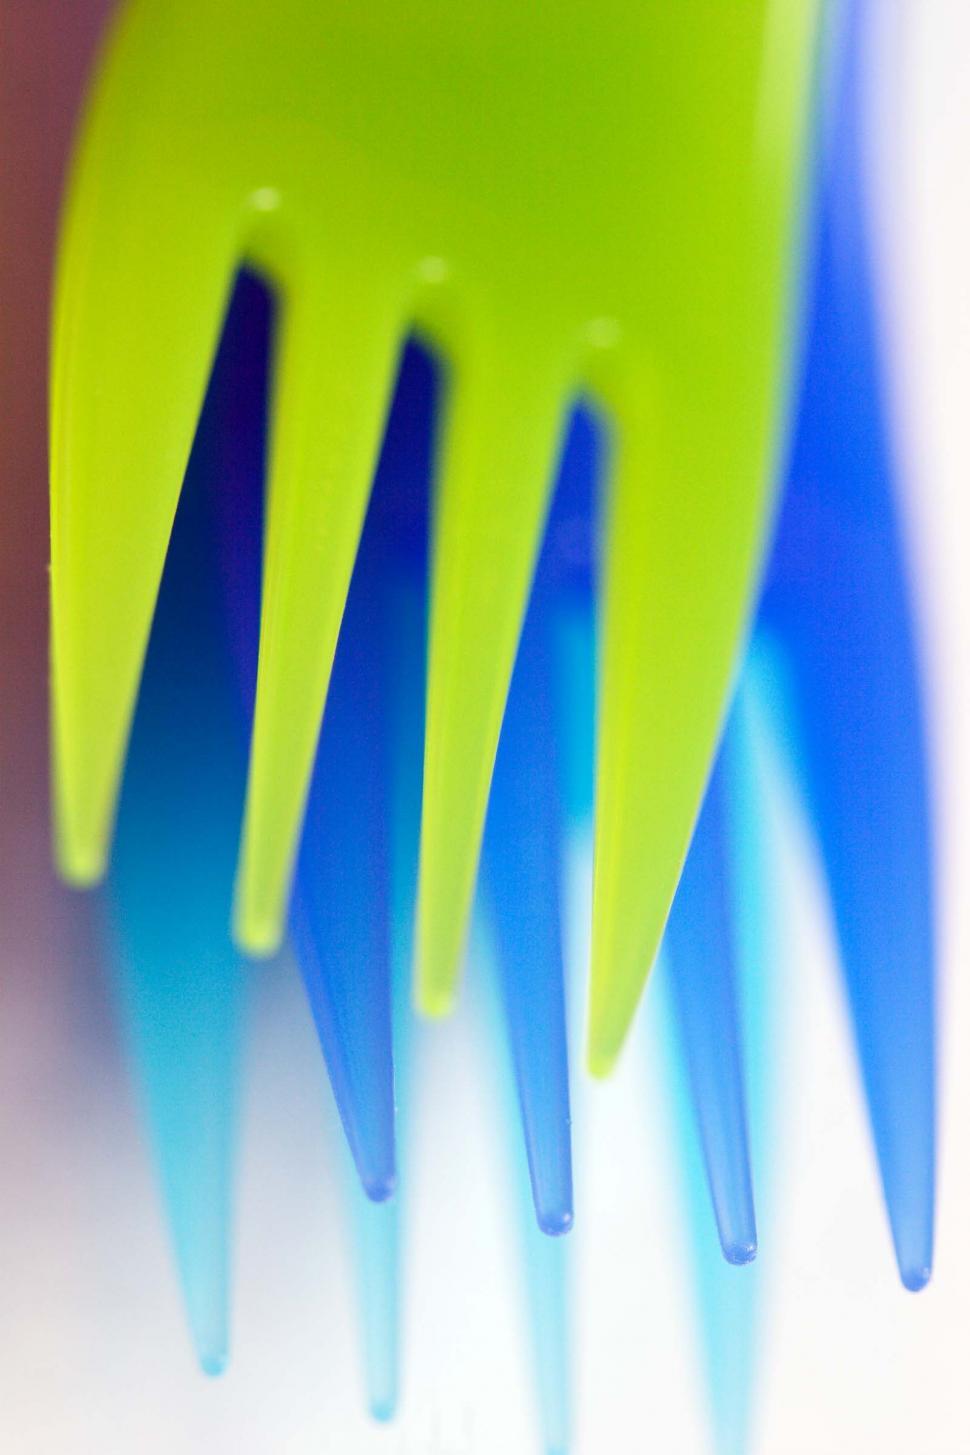 Free Image of Plastic forks 